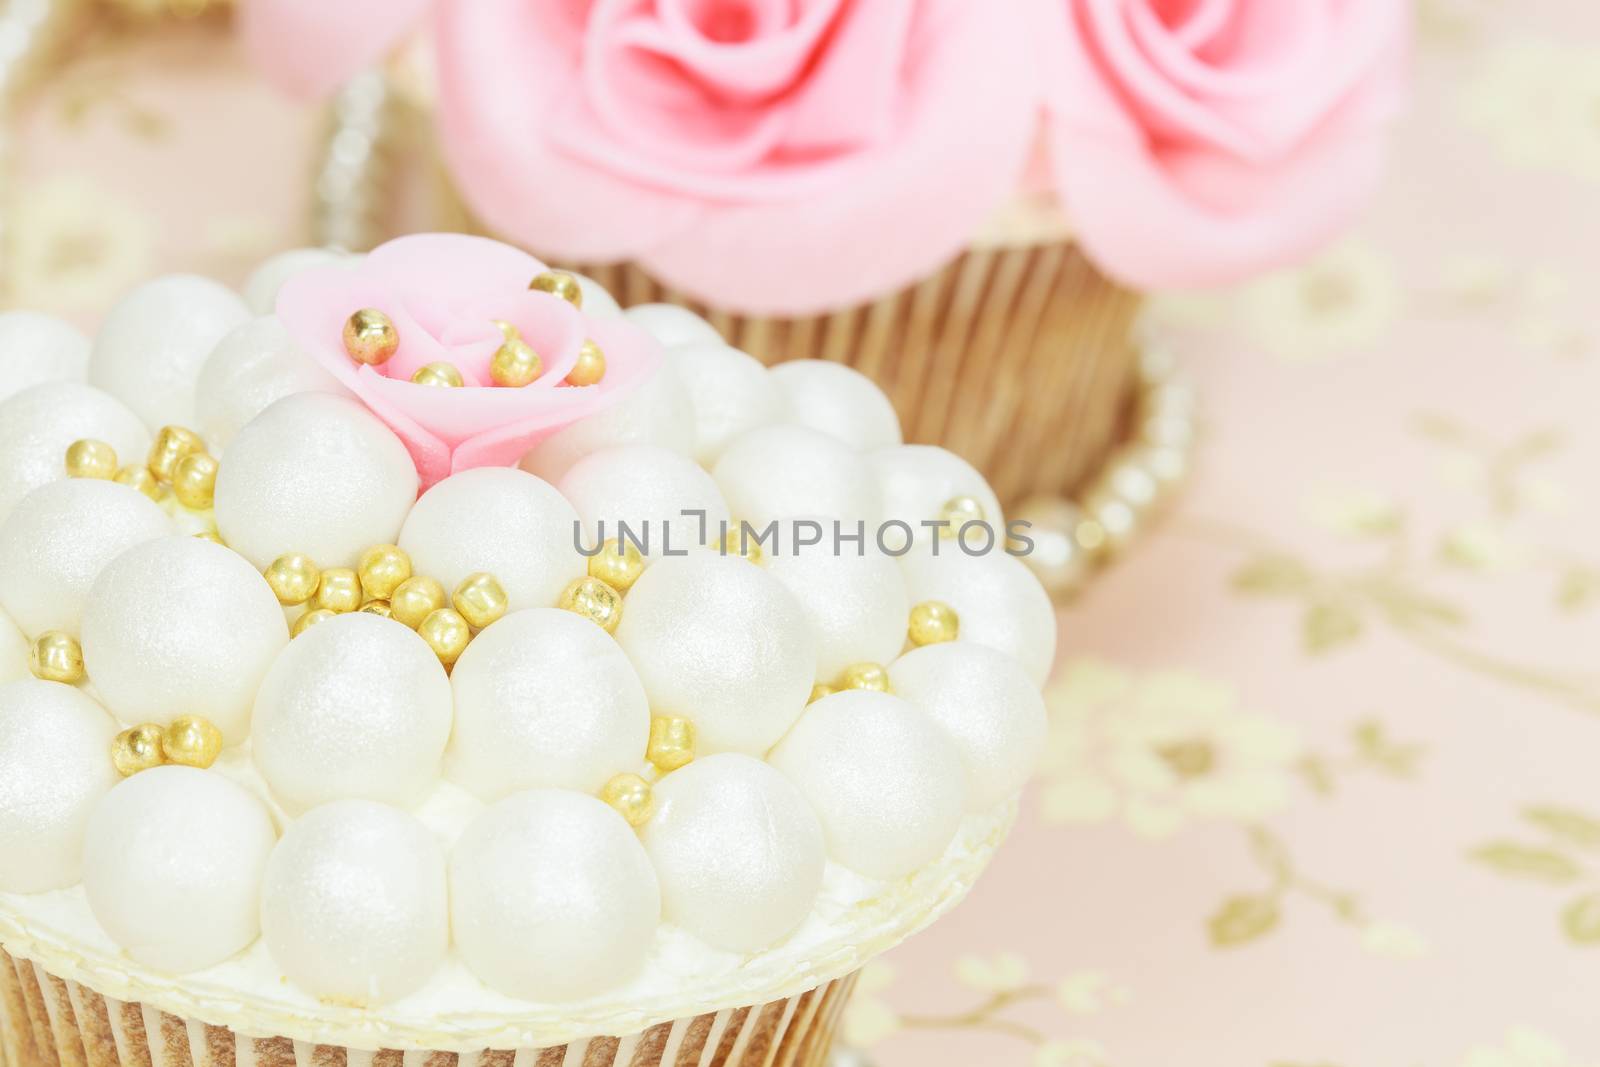 Wedding cupcakes. Copy space composition